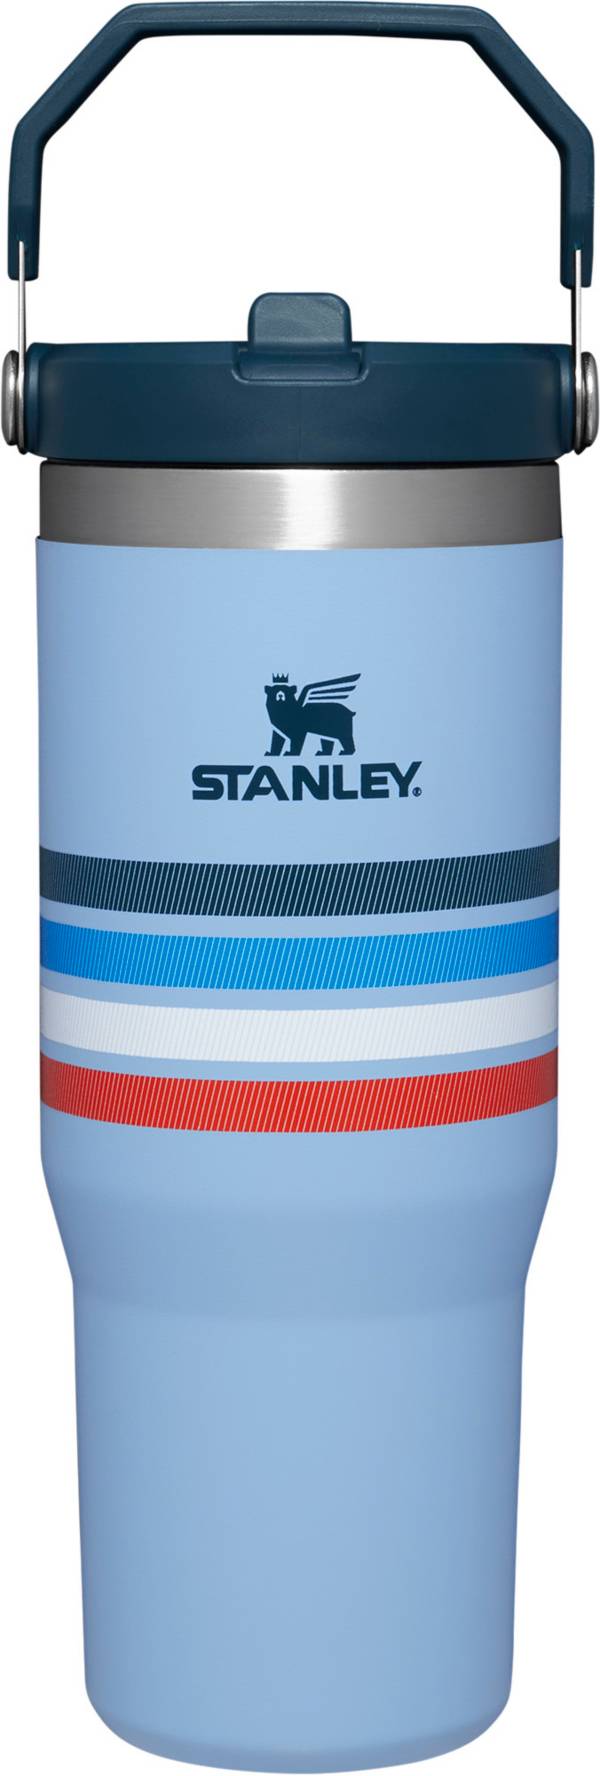 Stanley® 30 oz IceFlow™ Flip Straw Tumbler